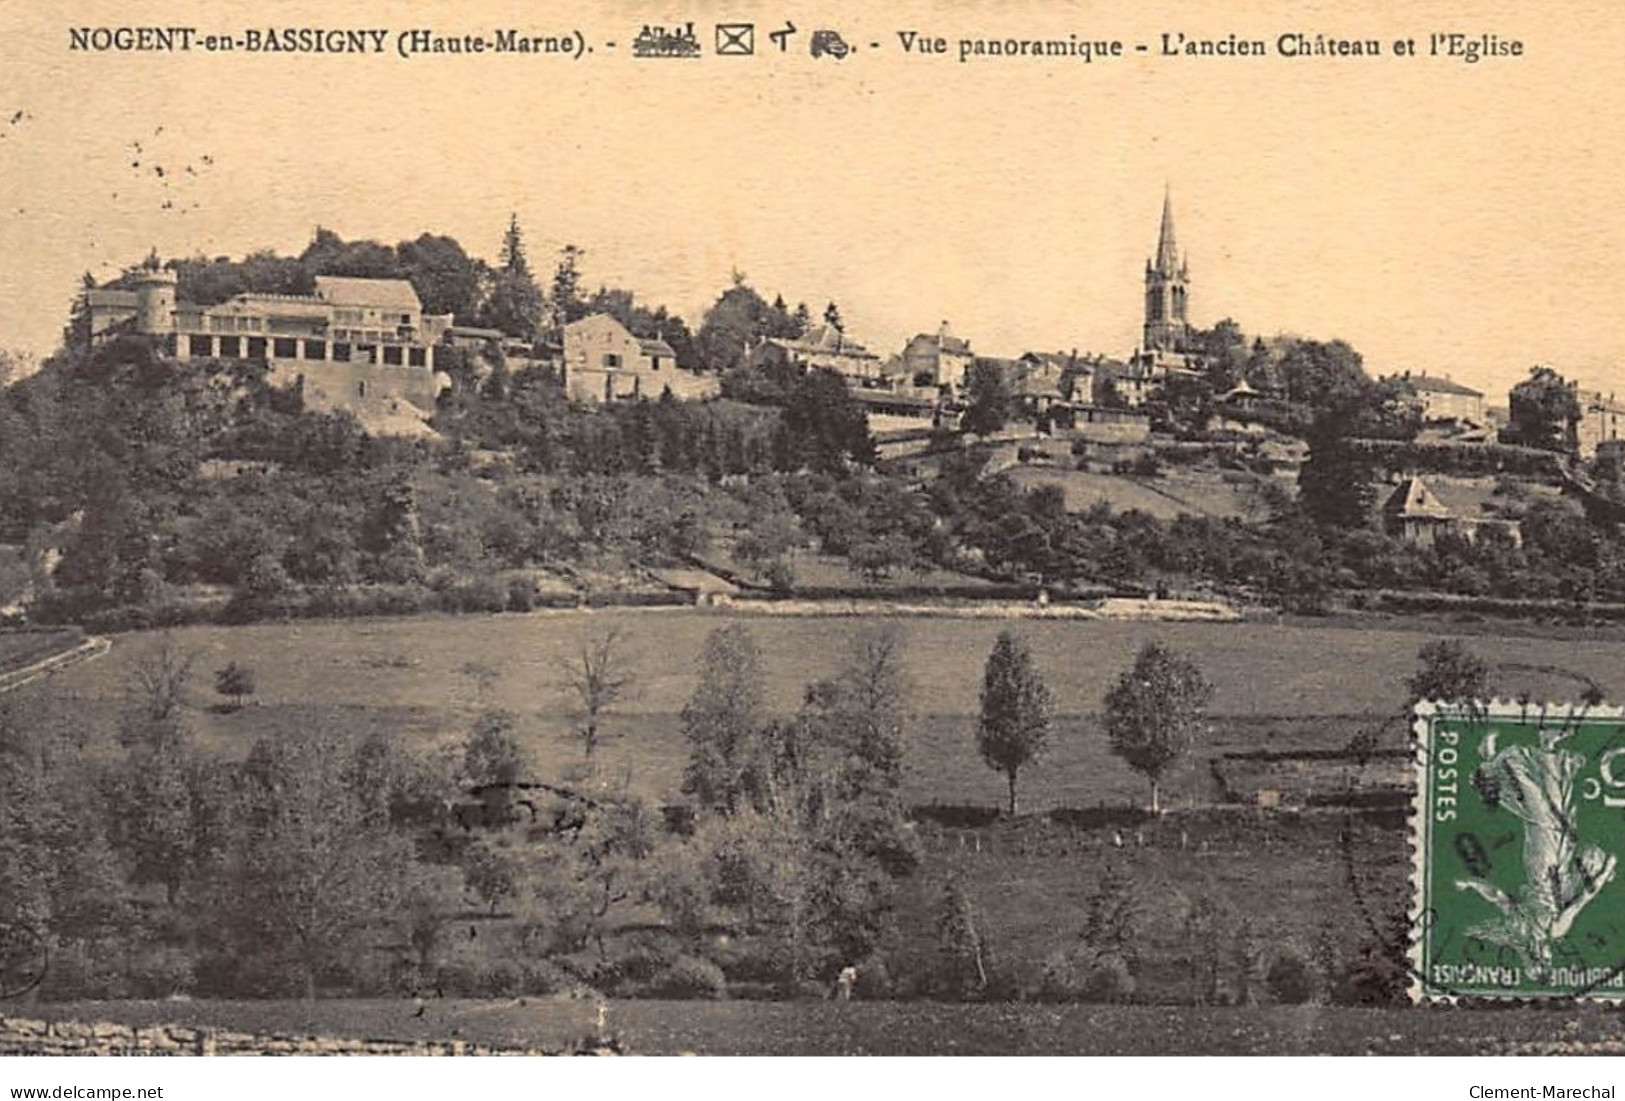 NOGENT-en-BASSIGNY : Vue Panoramique, L'ancien Chateau Et L'eglise - Tres Bon Etat - Nogent-en-Bassigny